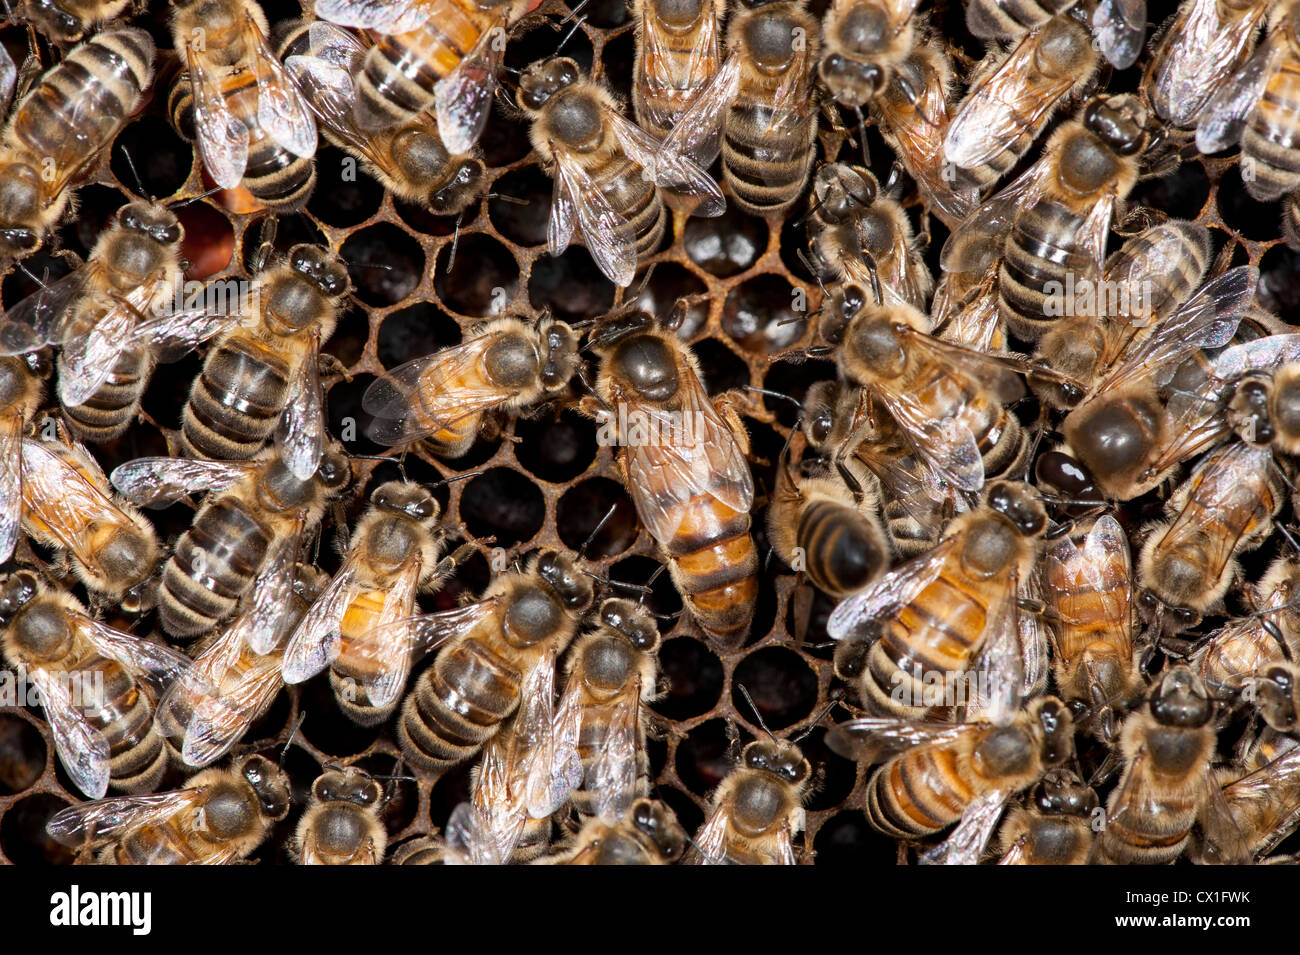 New Zealand Königin auf Zellen im Bienenstock umgeben von Arbeitnehmern Honig Biene Apis Mellifera Kent UK Honecomb tendenziell Zellen Stockfoto